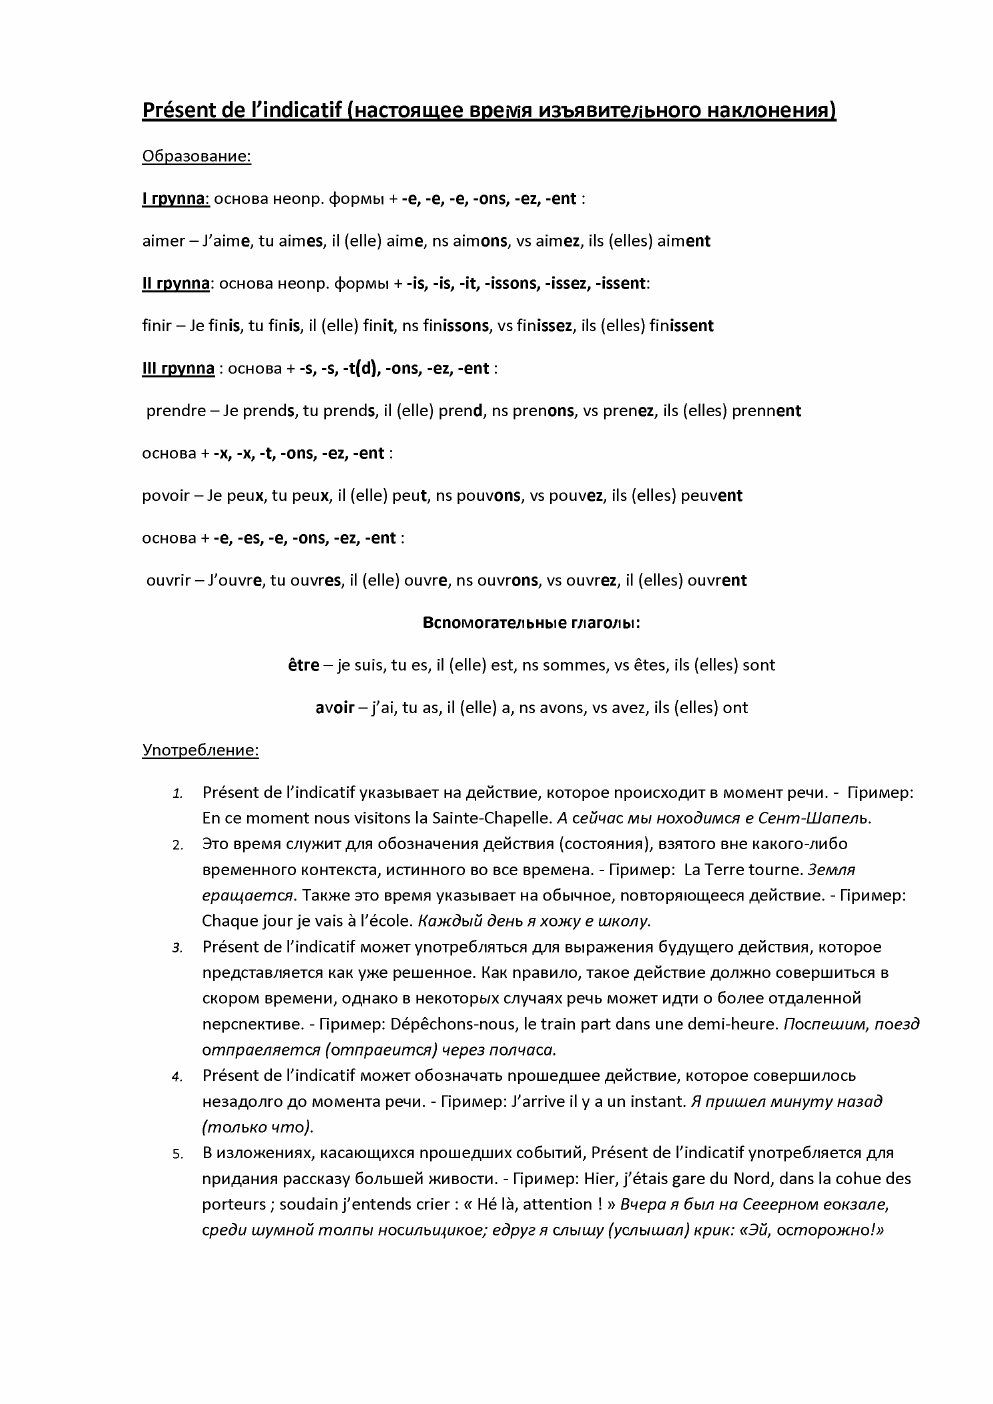 Prévisualisation du document Présent de l'indicatif (Hacroamee Bpeivia uebflBmre/ibHoro HaKi/oHeHua)